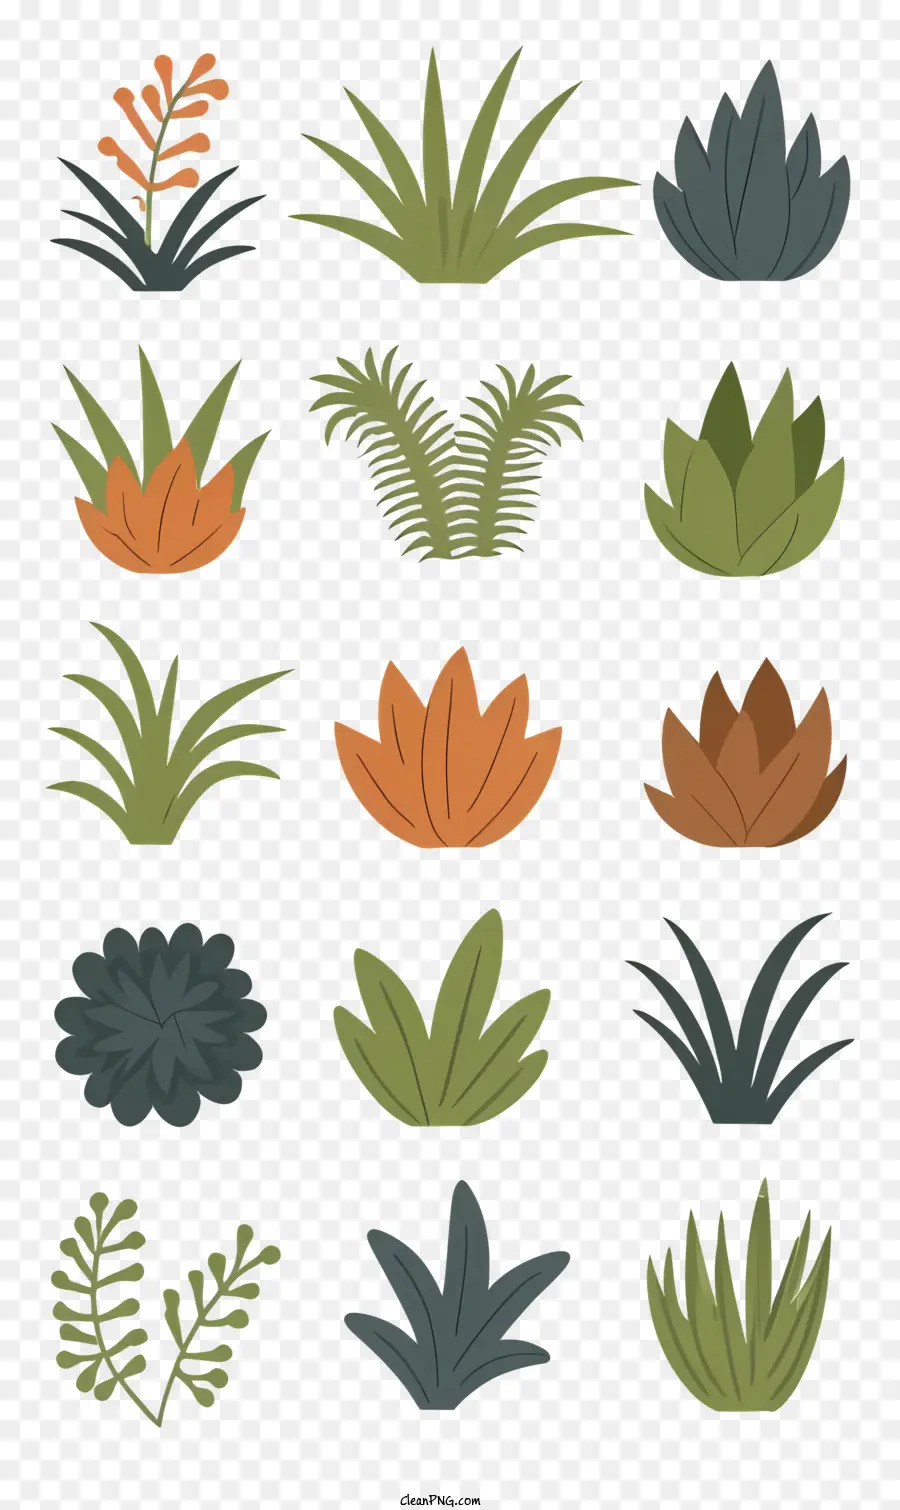 Cartoon Sukkulenten Orangen Sukkulenten grüne Blattpflanzen dunkelgrüne Blätter - Verschiedene Sukkulenten mit lebendigen Blättern und Blüten